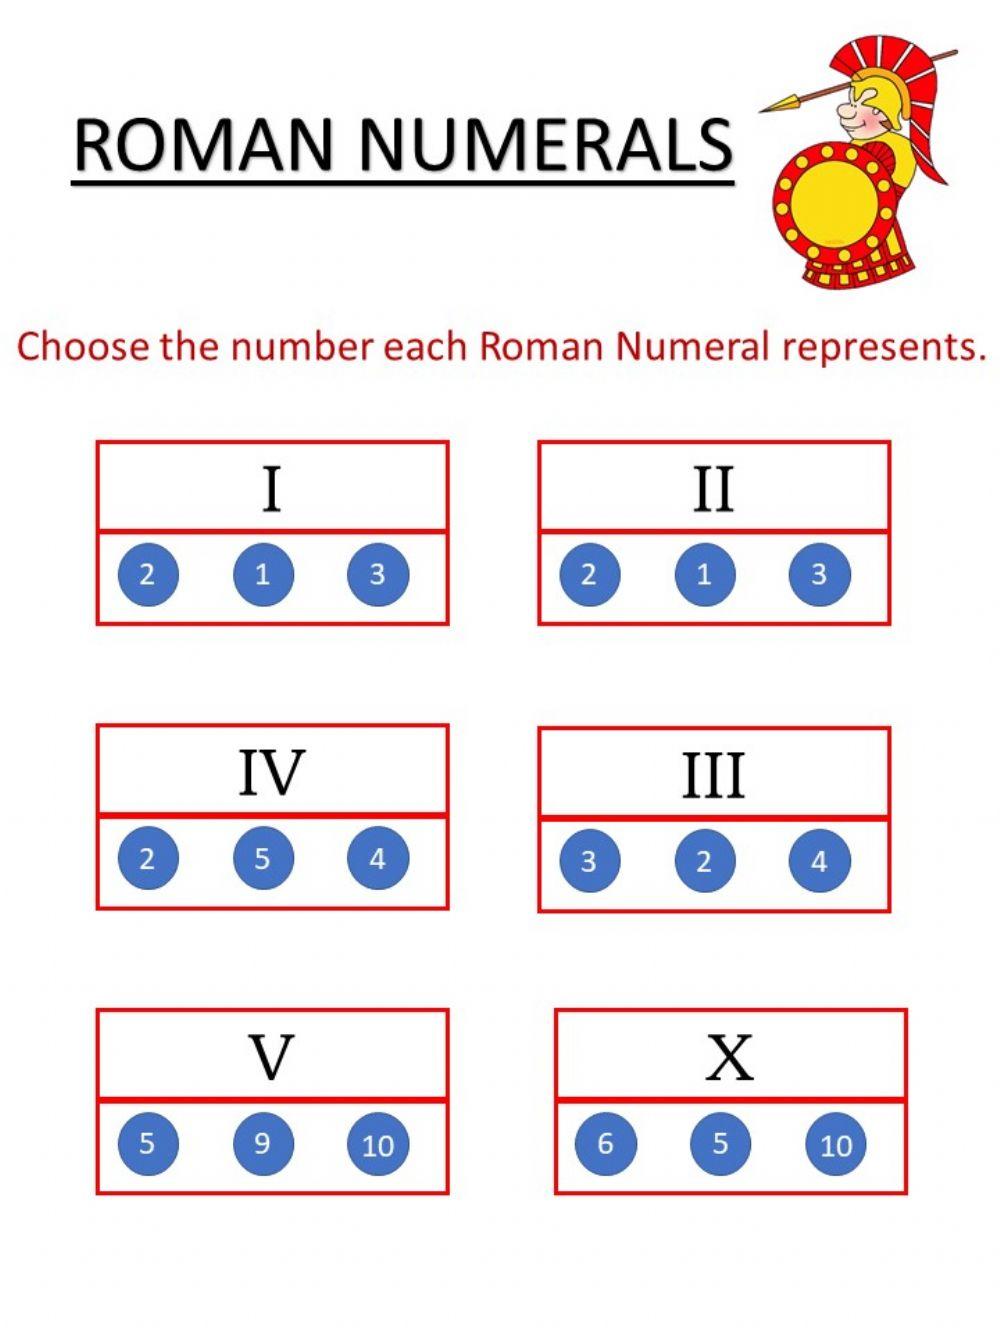 Roman numerals 2